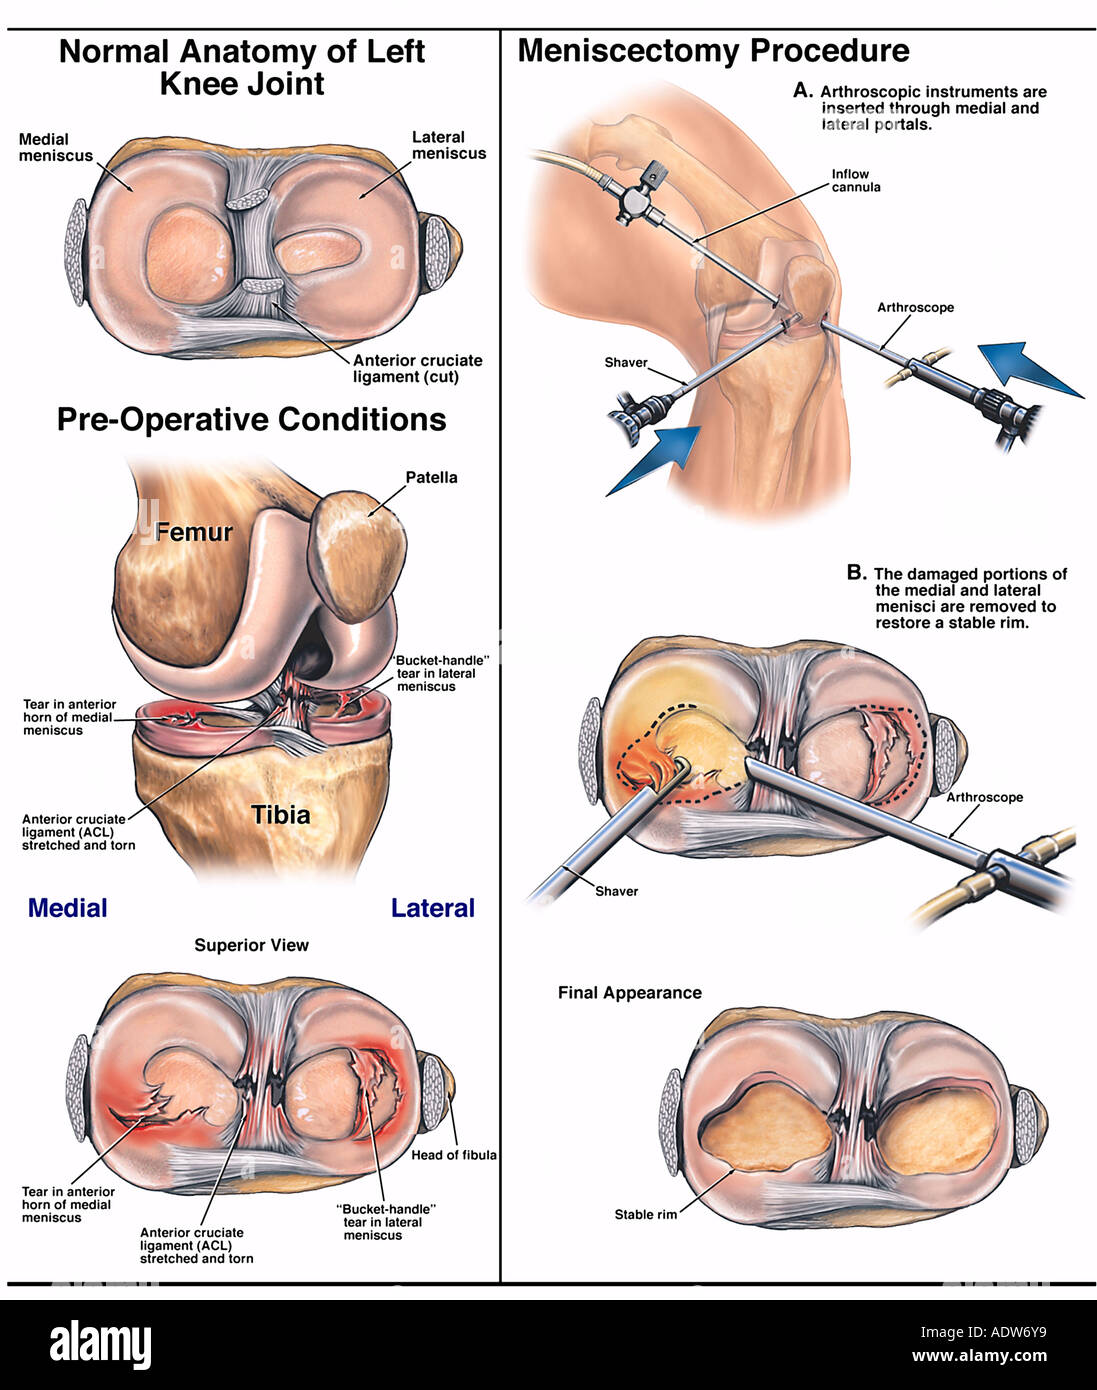 arthroscopic knee procedure